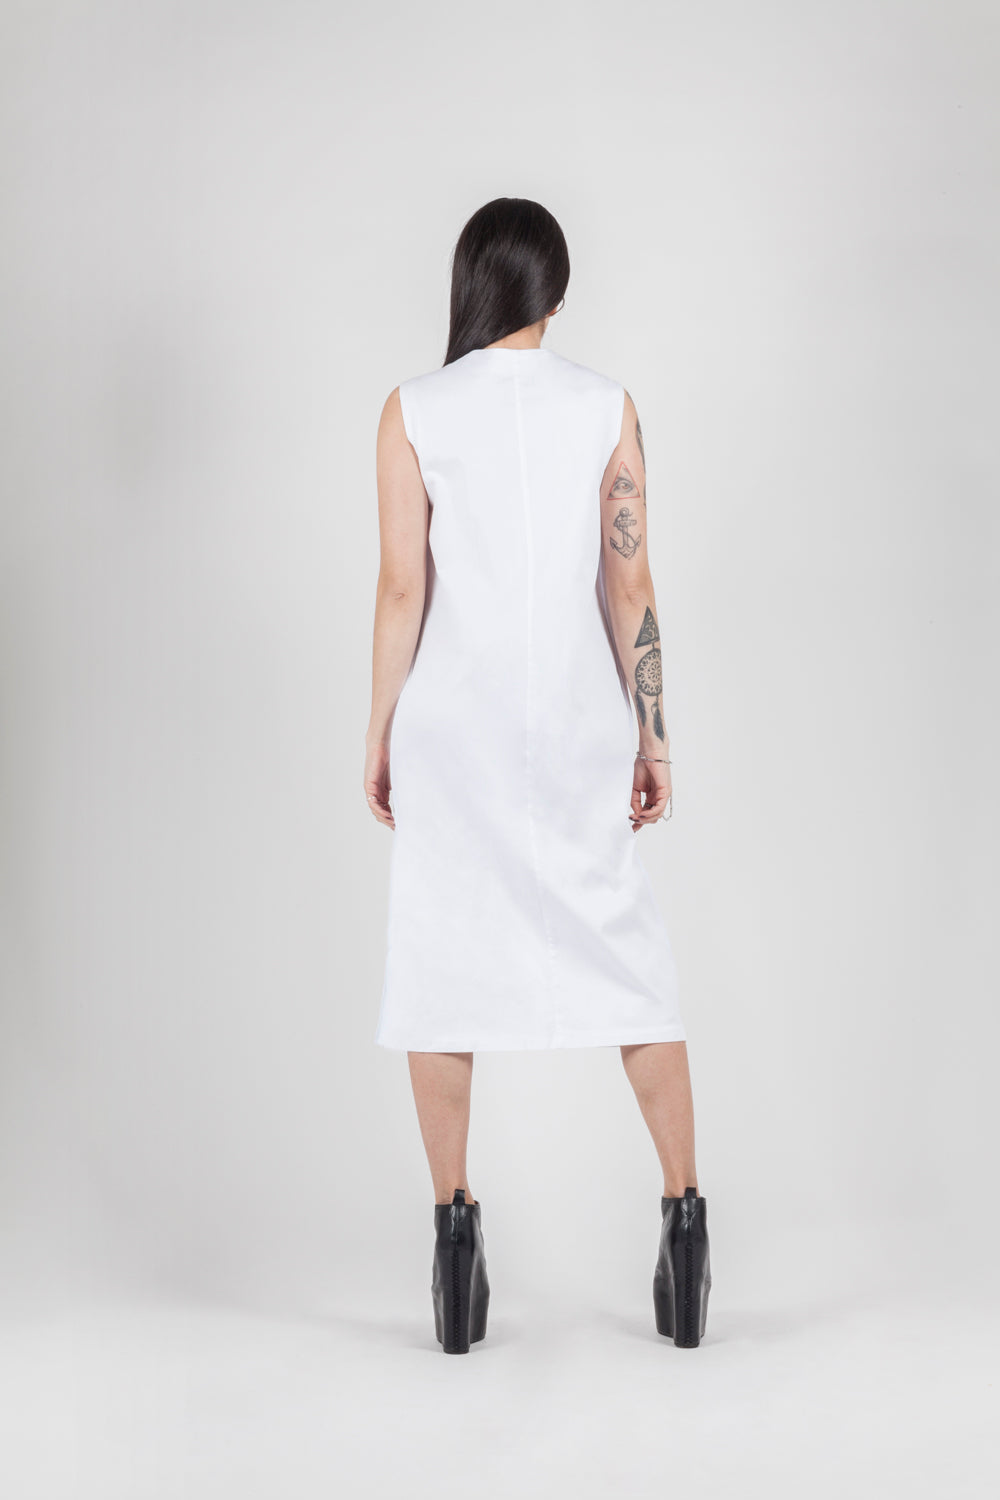 Long white bottons dress - Natural Born Humans Store